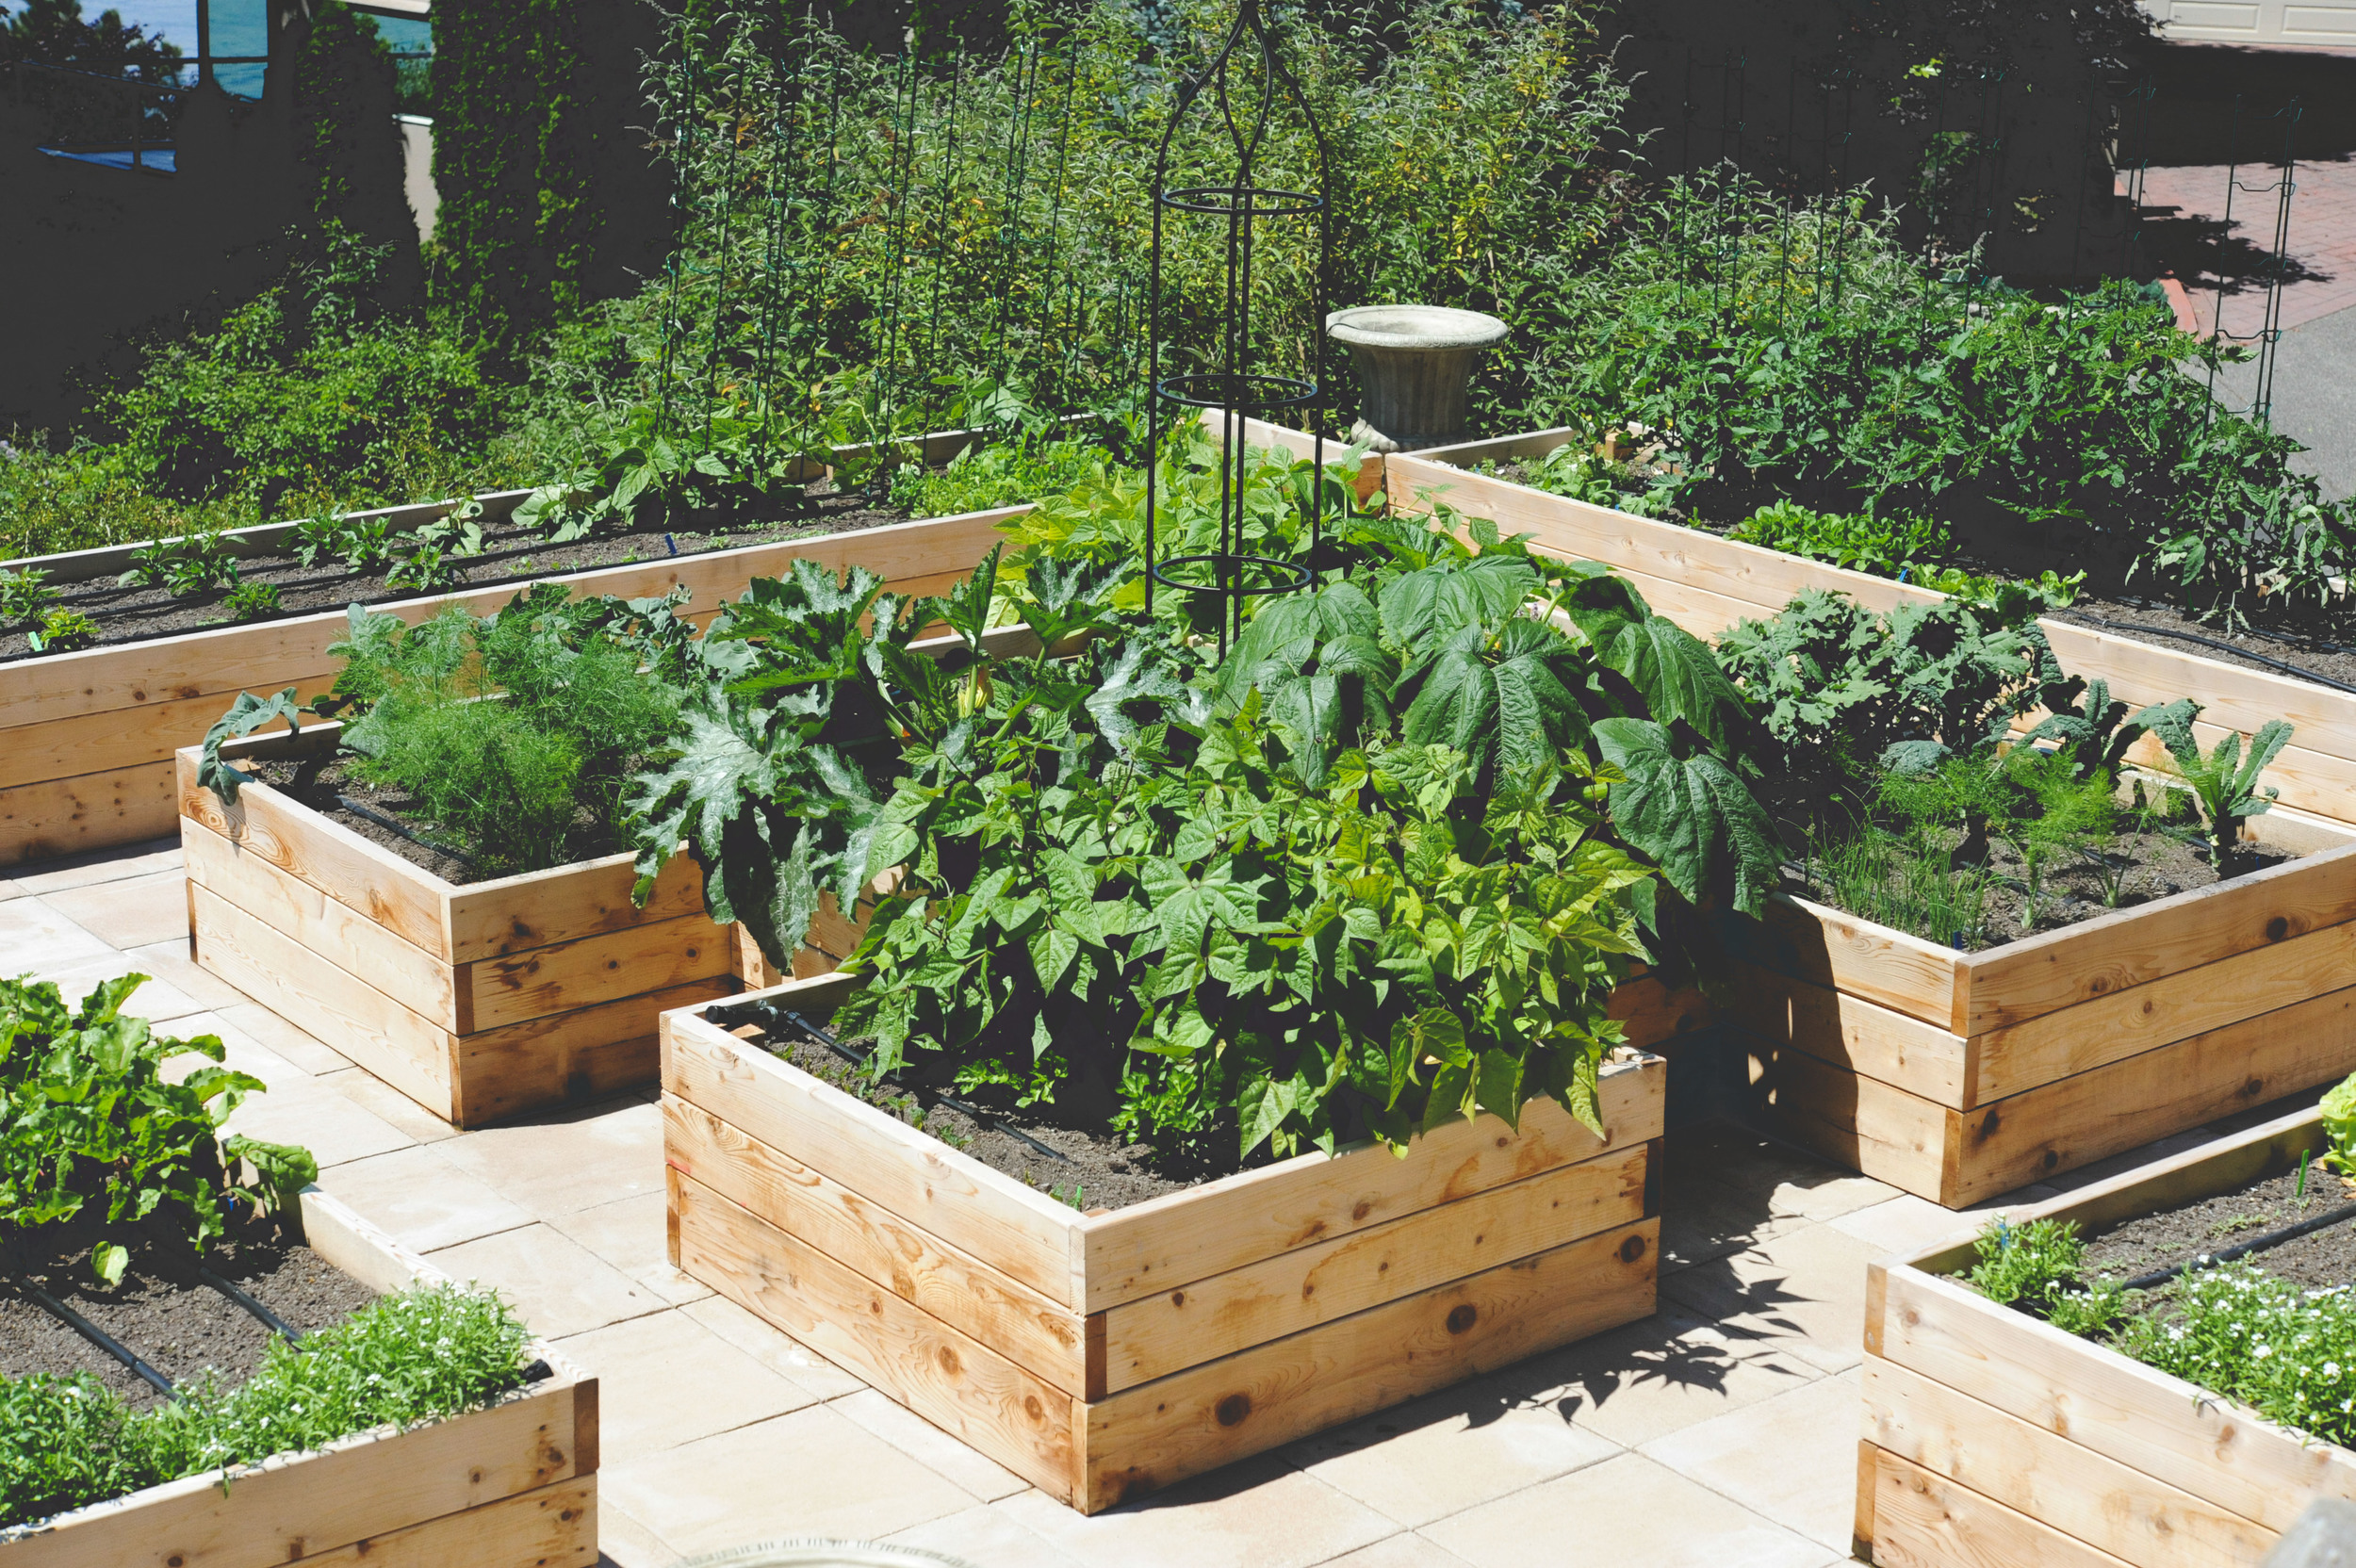 Rooftop_kitchen garden_Seattle Urban Farm Company 